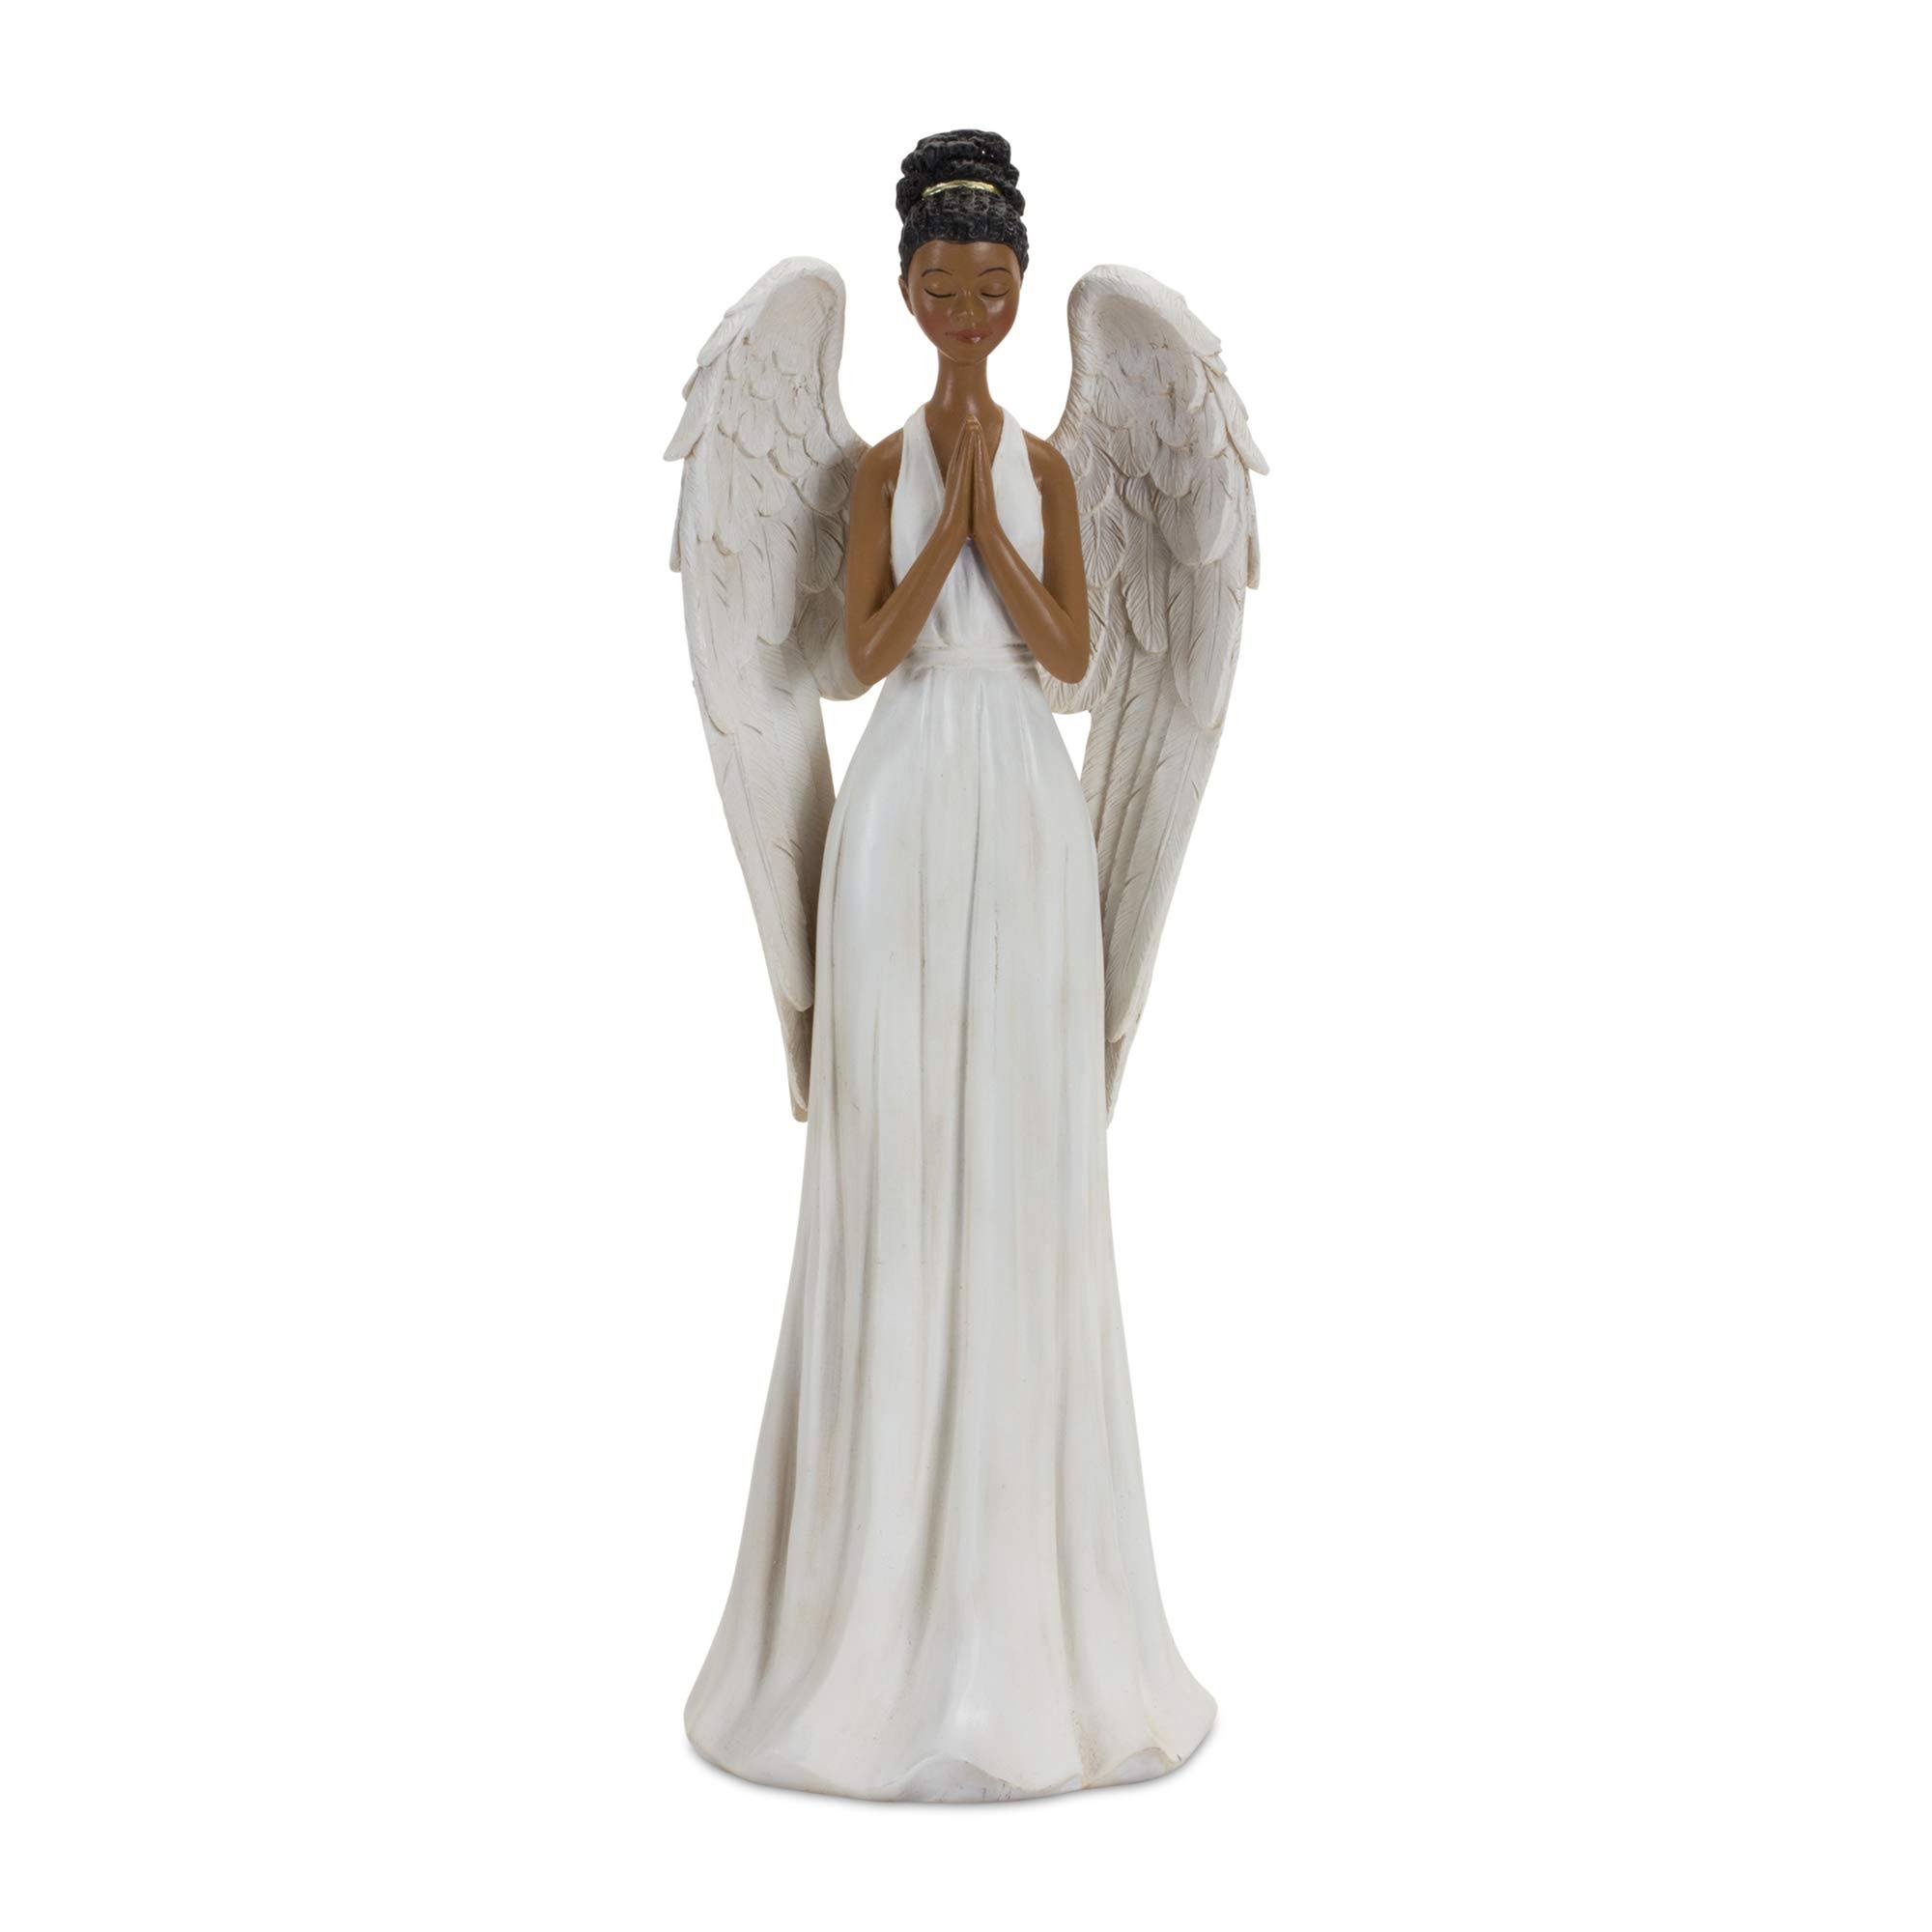 Melrose 83868 Praying Angel Figurine, 14-inch Height, Resin